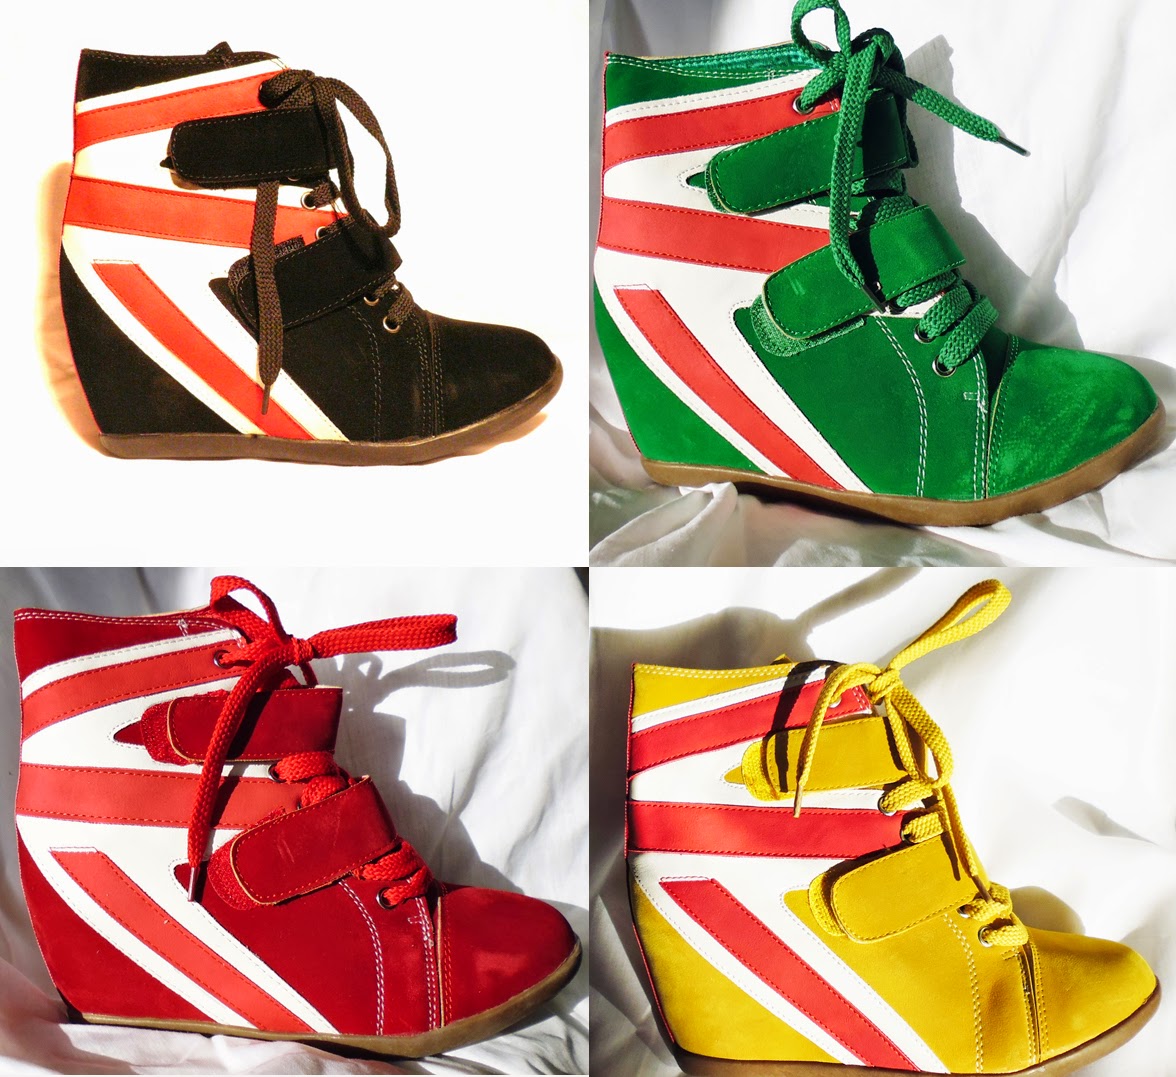 http://www.ebay.fr/itm/baskets-femme-sneakers-compensees-vert-vertes-rouges-rouge-noir-noires-jaune-/301539359877?ssPageName=STRK:MESE:IT